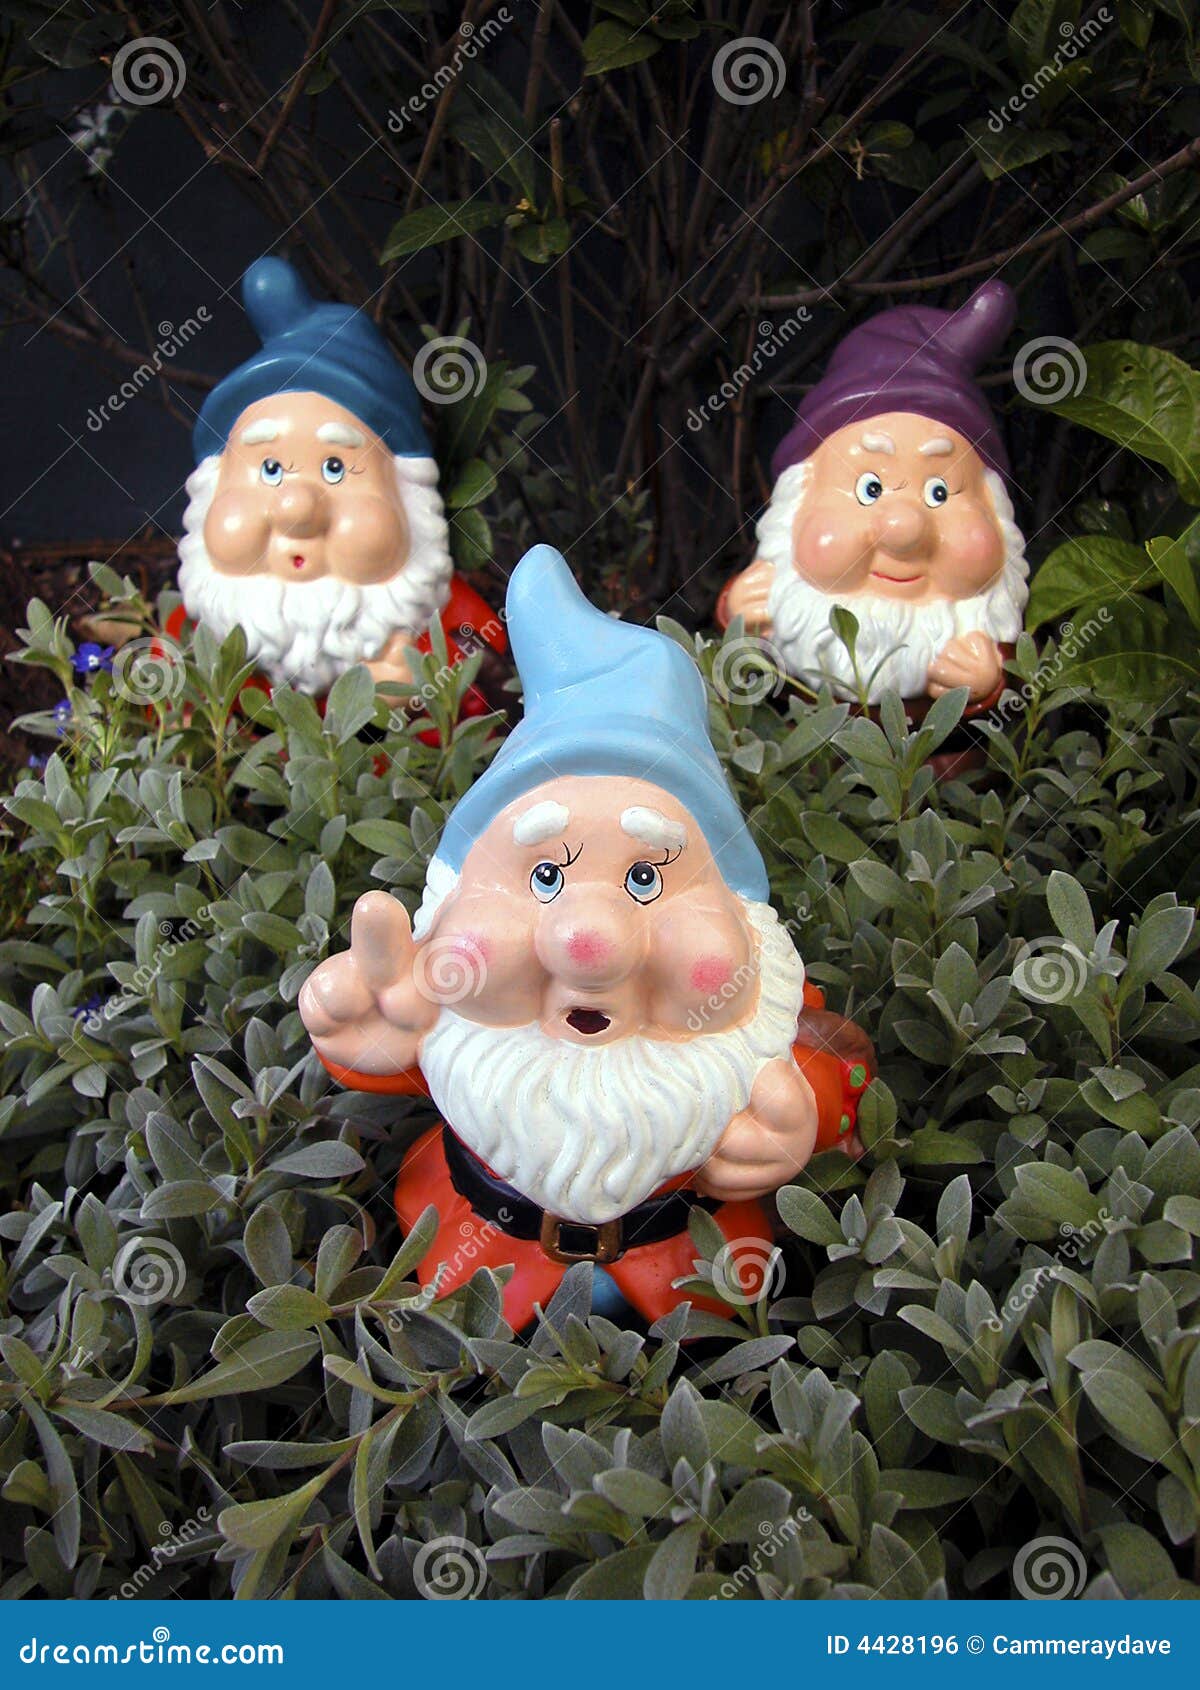 Three garden gnomes in the garden.